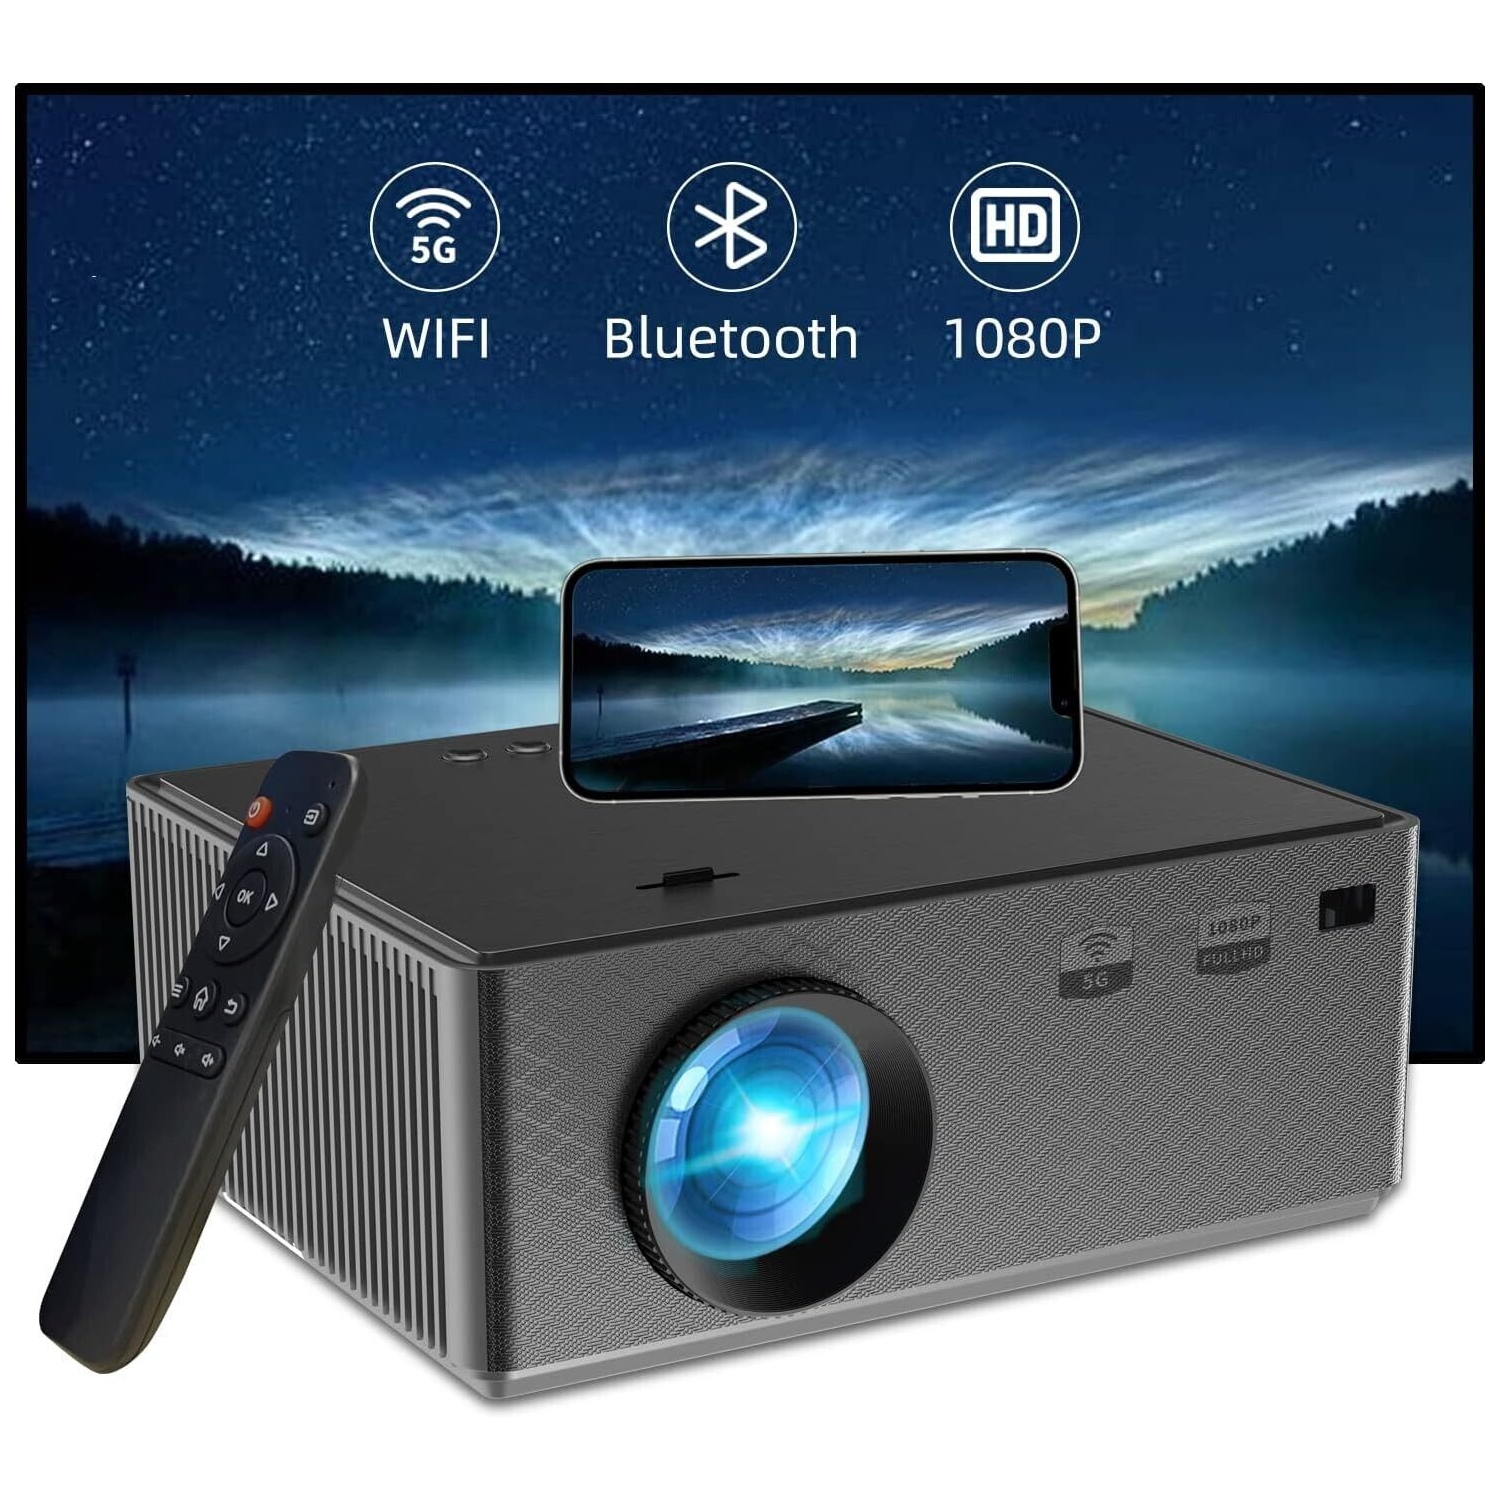 ILIMPID Video Projector - Native 1080p Full HD, WiFi, Bluetooth